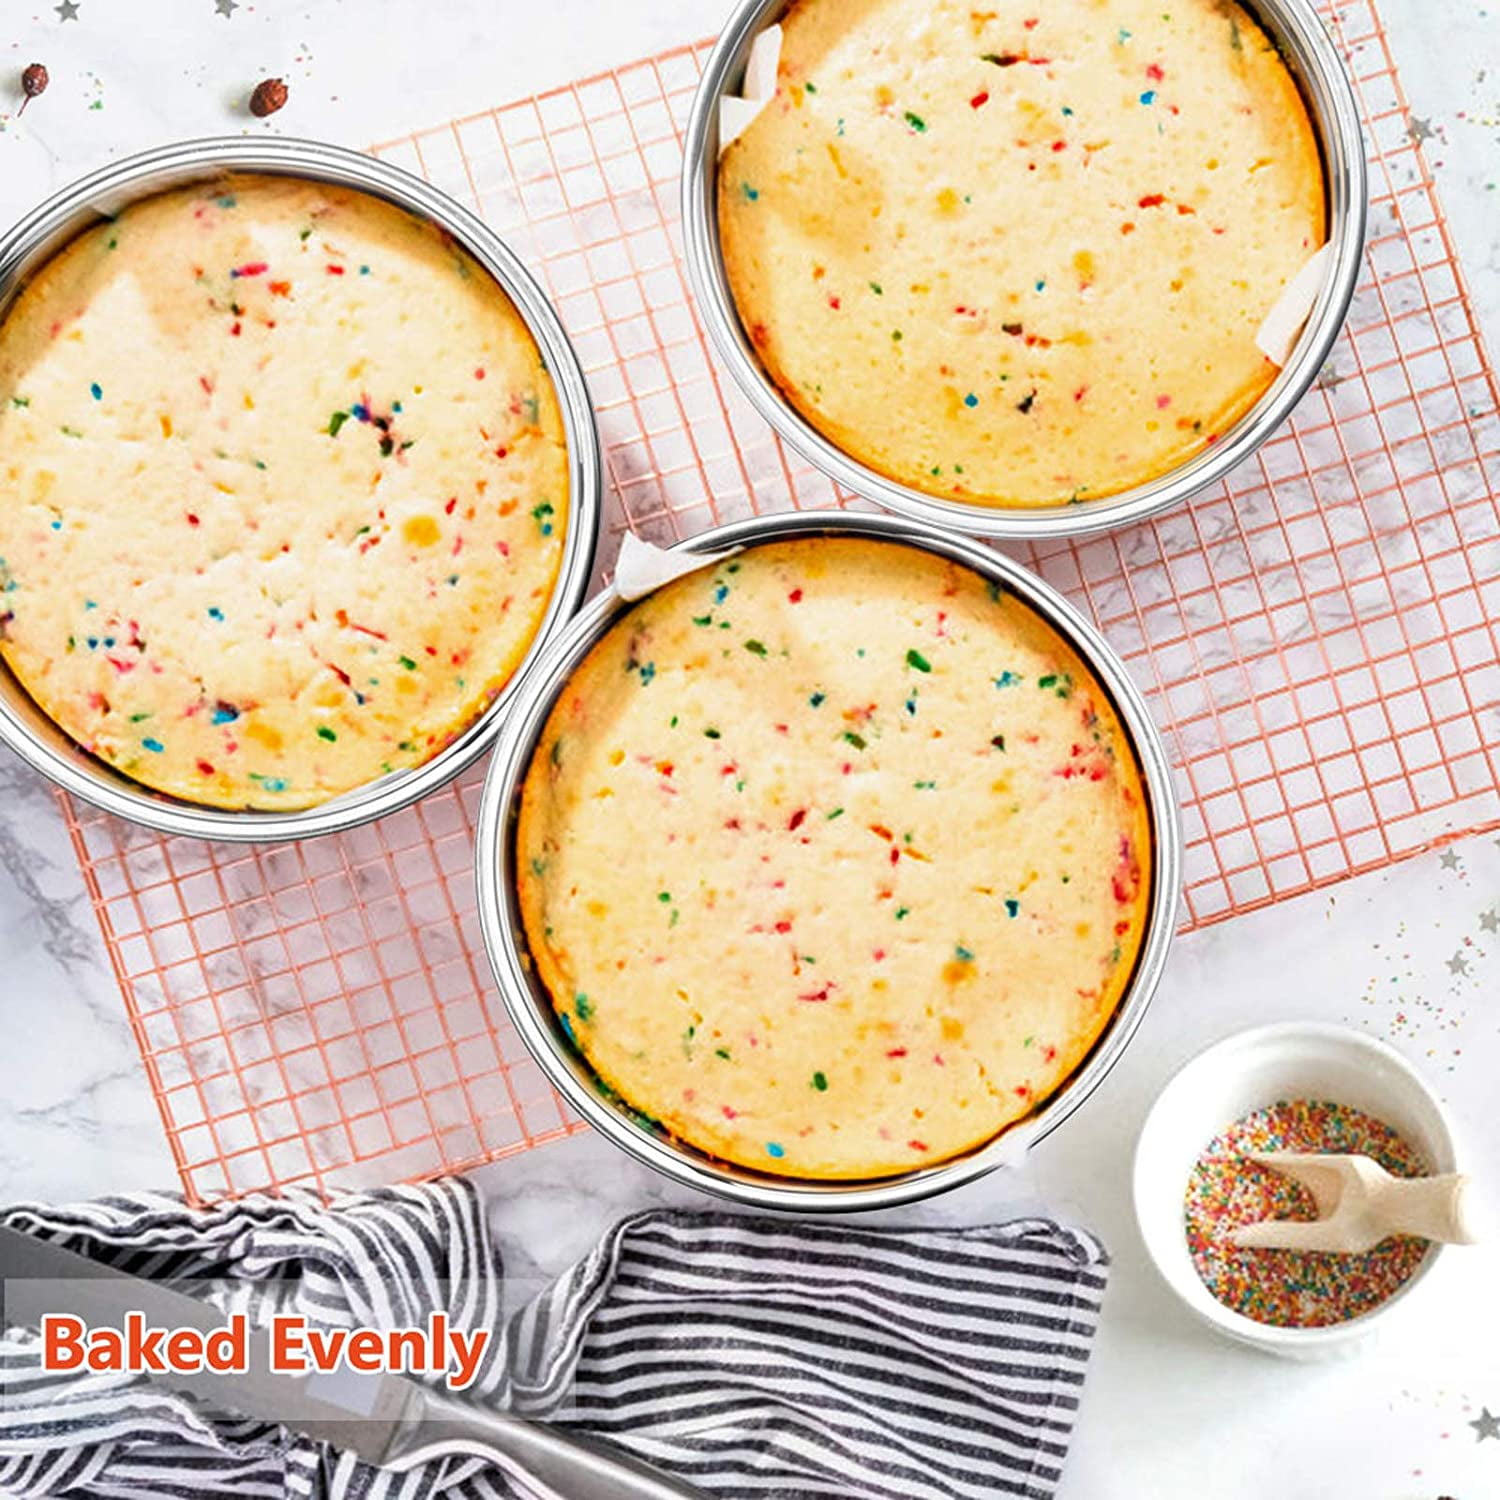  E-far 9½ Inch Cake Pan Set of 3, Stainless Steel Round Cake  Baking Pans, Non-Toxic & Healthy, Mirror Finish & Dishwasher Safe: Home &  Kitchen